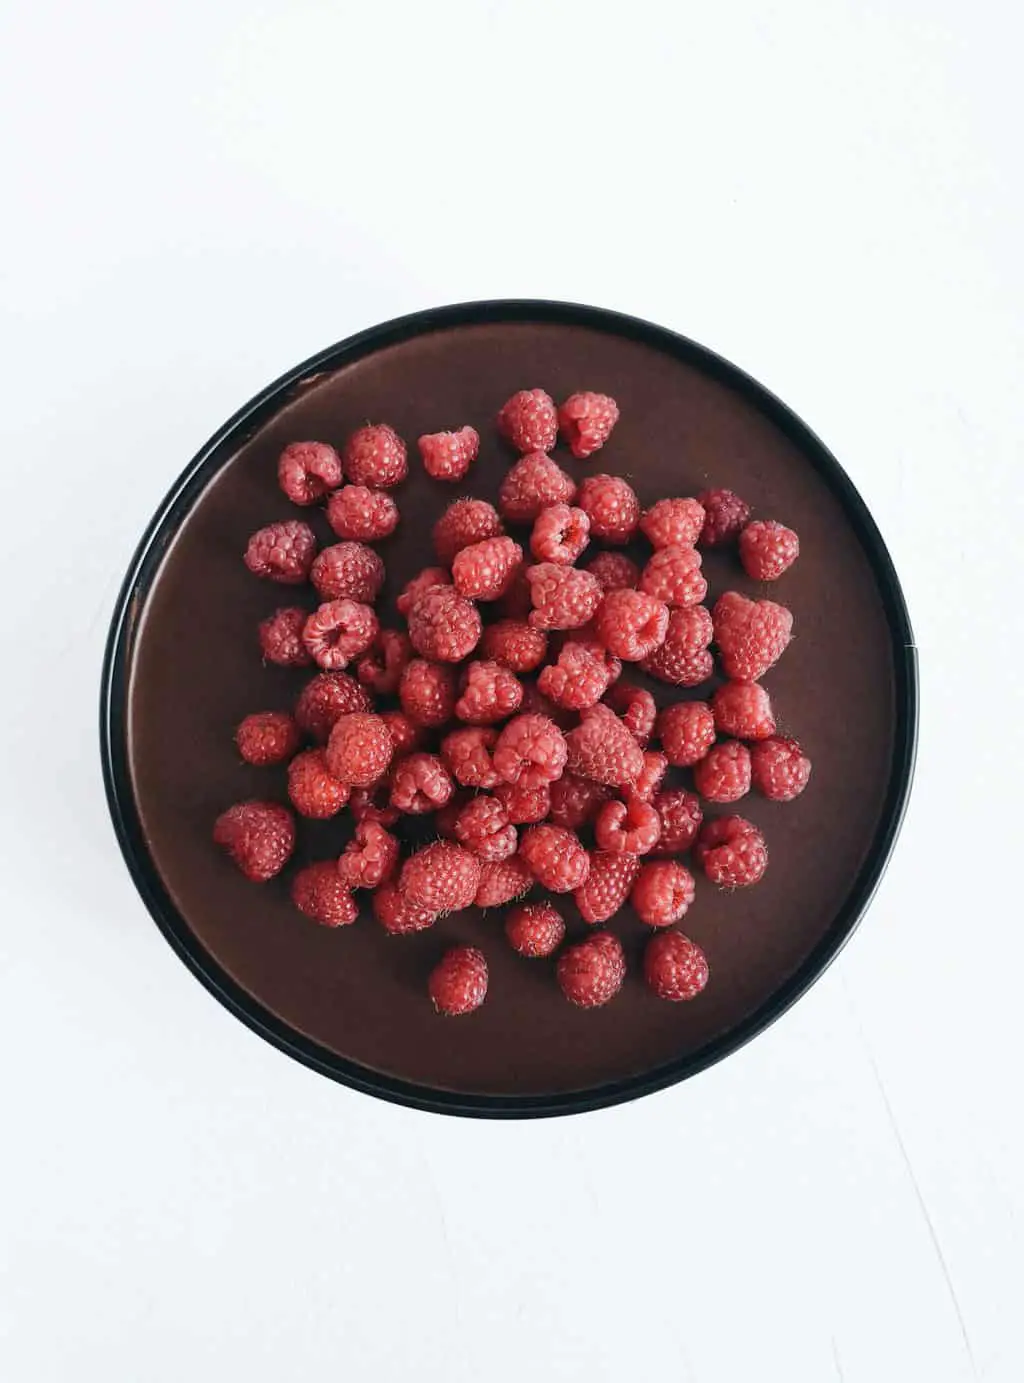 how to clean raspberries